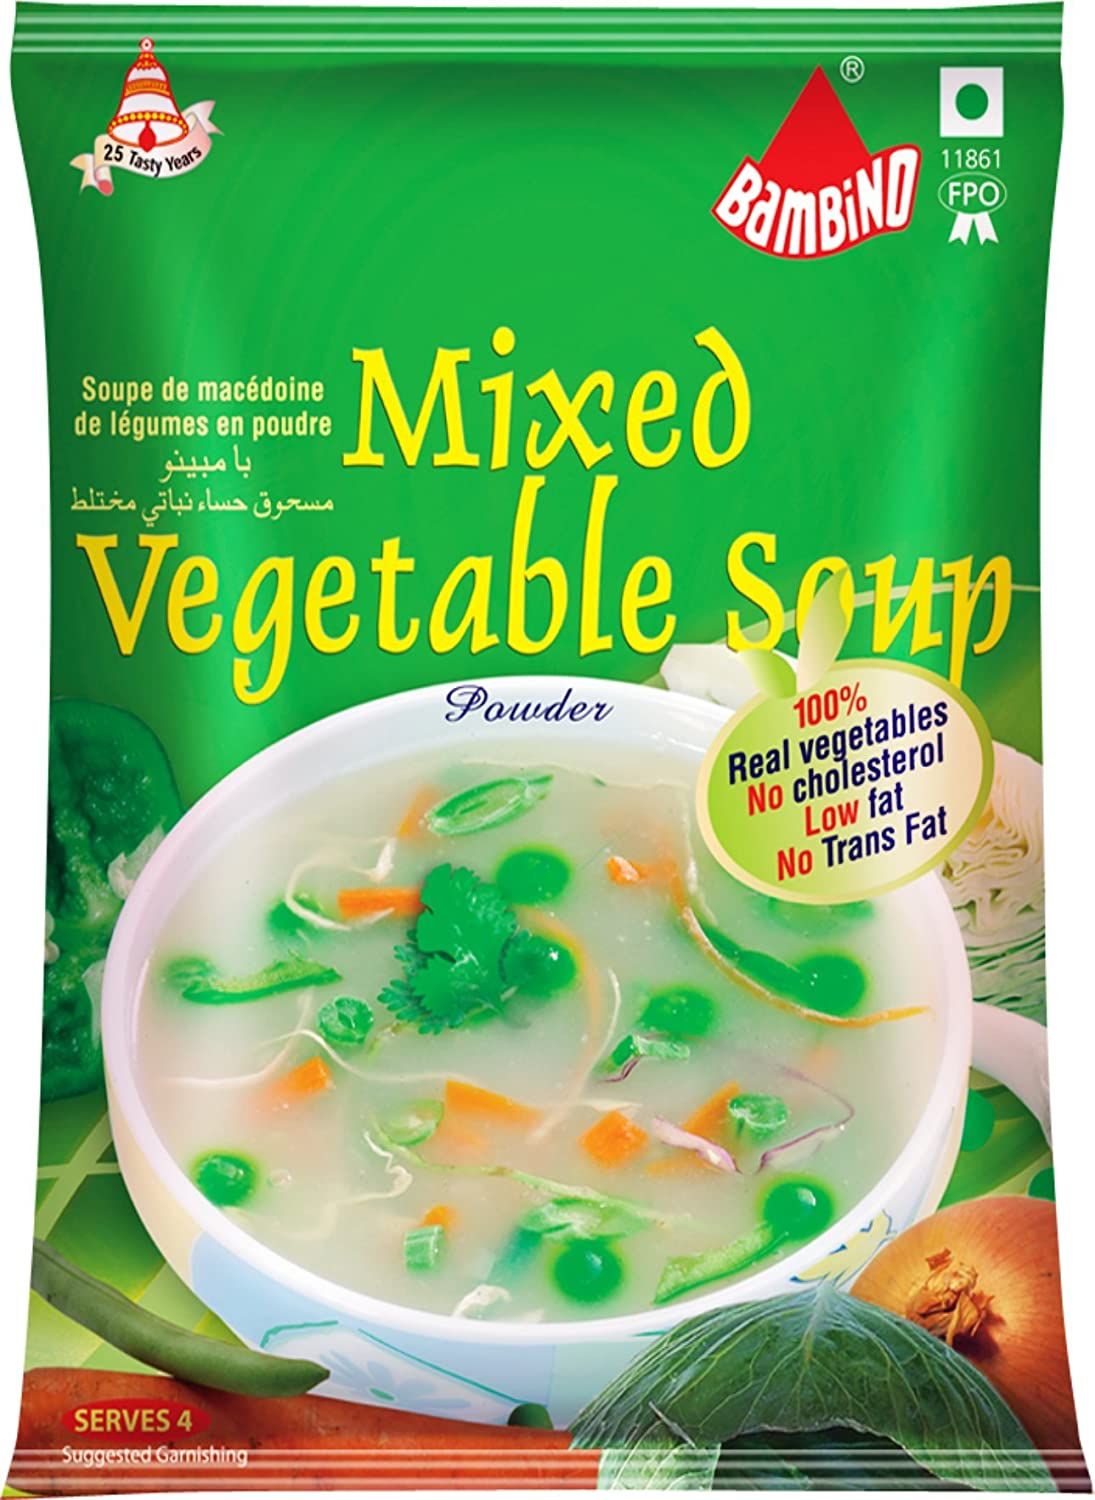 Bambino Mixed Veg Soup Image